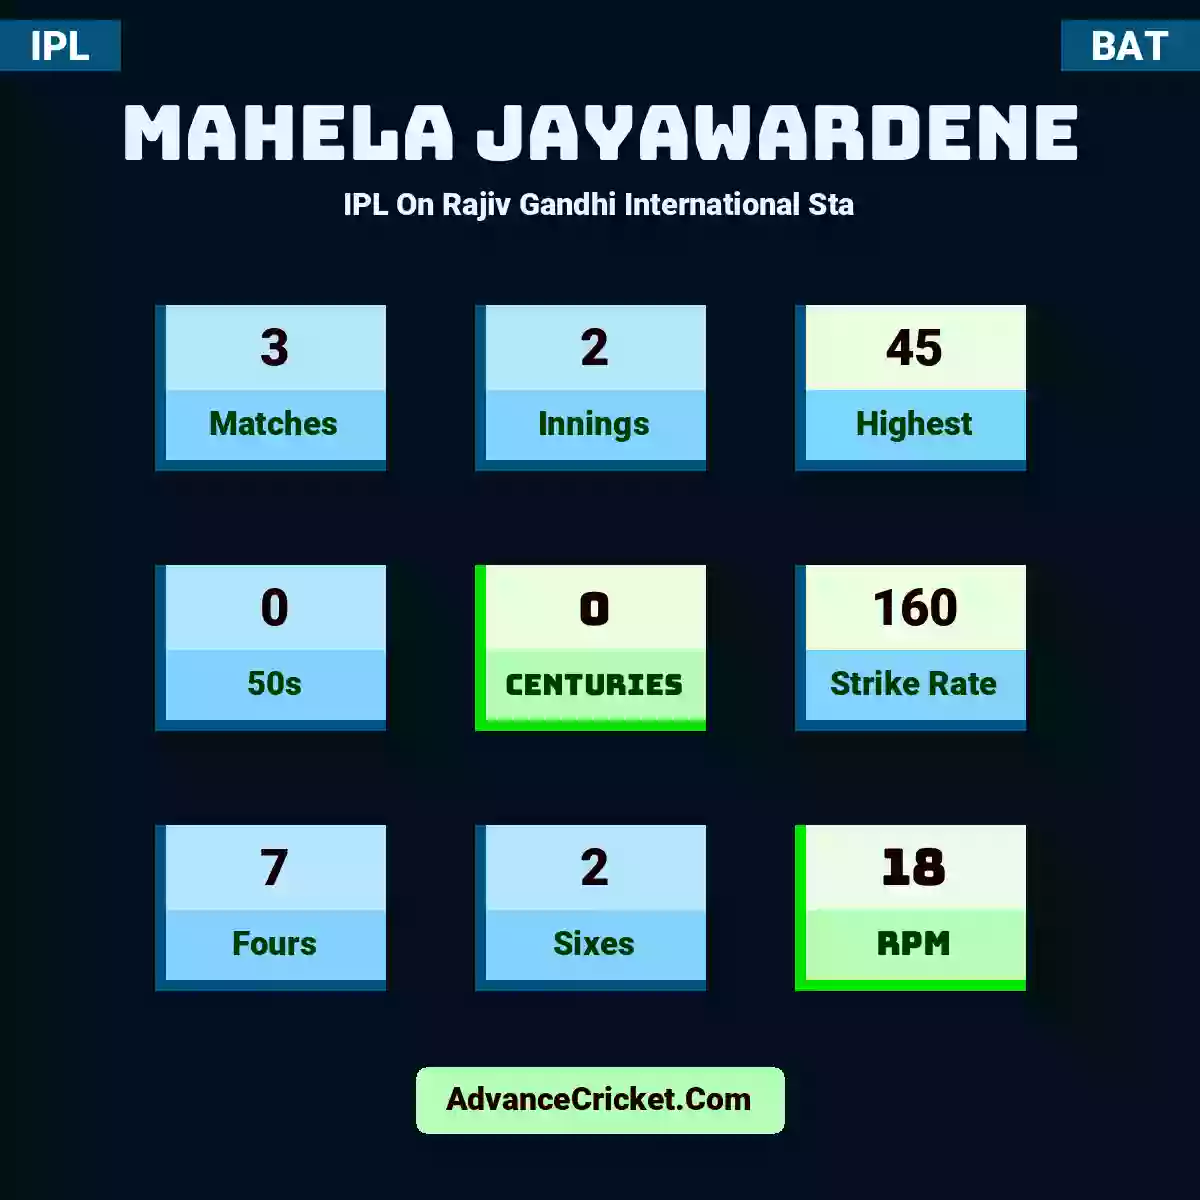 Mahela Jayawardene IPL  On Rajiv Gandhi International Sta, Mahela Jayawardene played 3 matches, scored 45 runs as highest, 0 half-centuries, and 0 centuries, with a strike rate of 160. M.Jayawardene hit 7 fours and 2 sixes, with an RPM of 18.